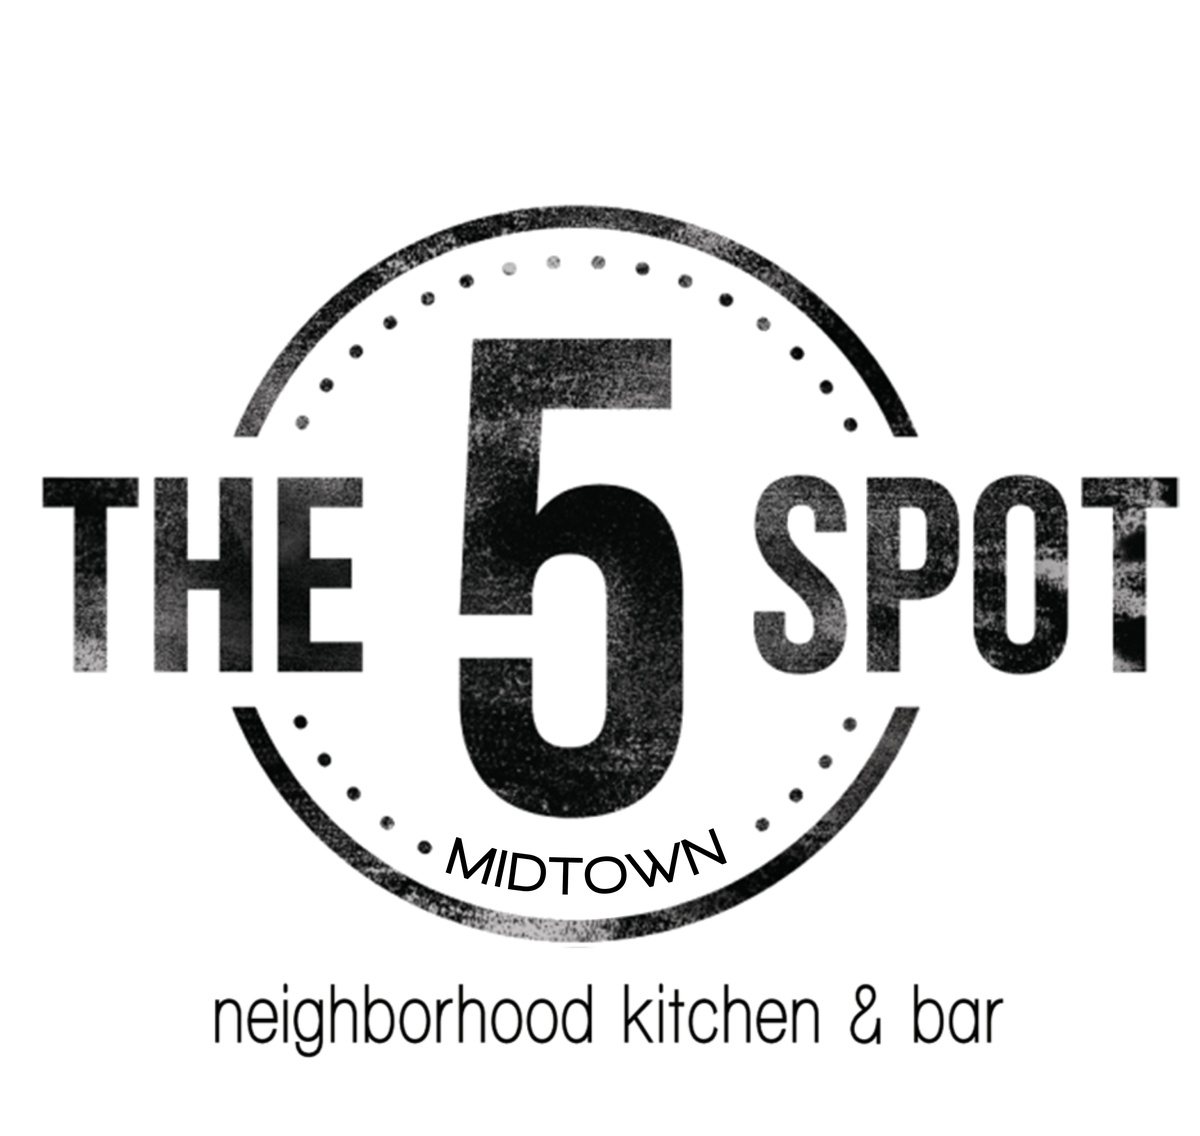 Visit the 5 spots midtown website